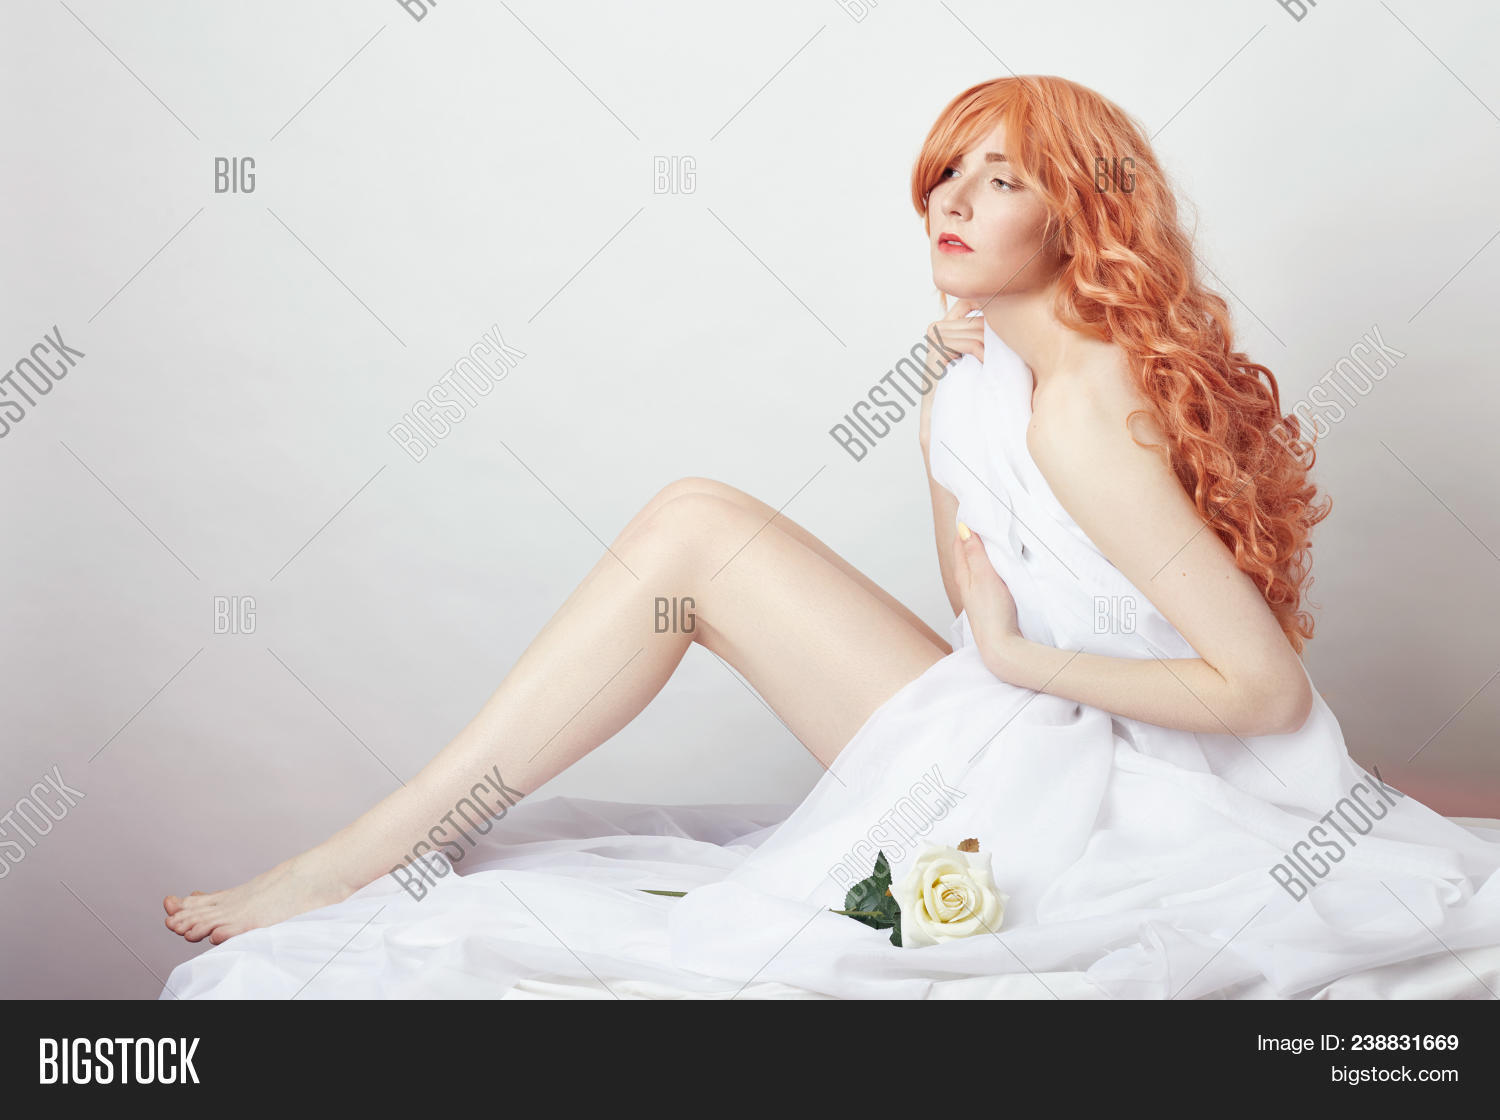 bruno luis share hot redhead women naked photos